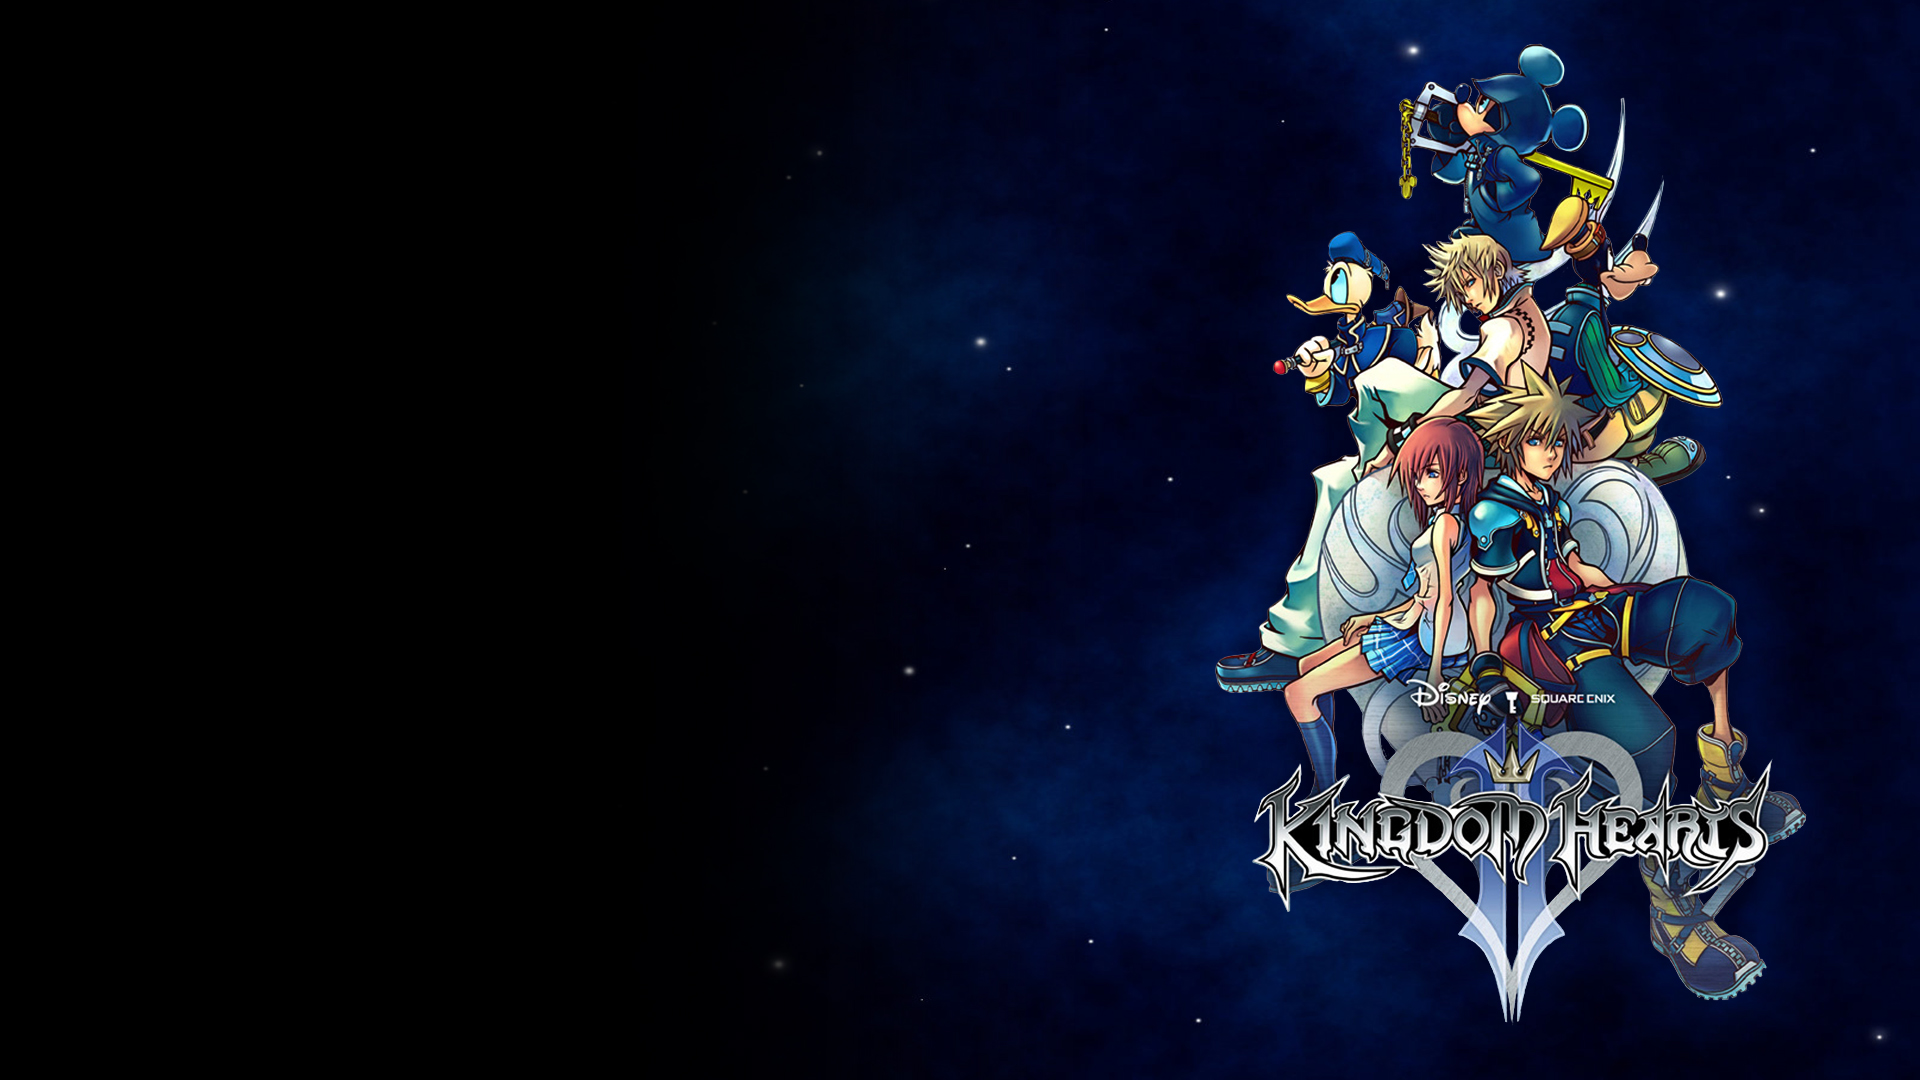  Kingdom Hearts II HD Wallpapers Backgrounds